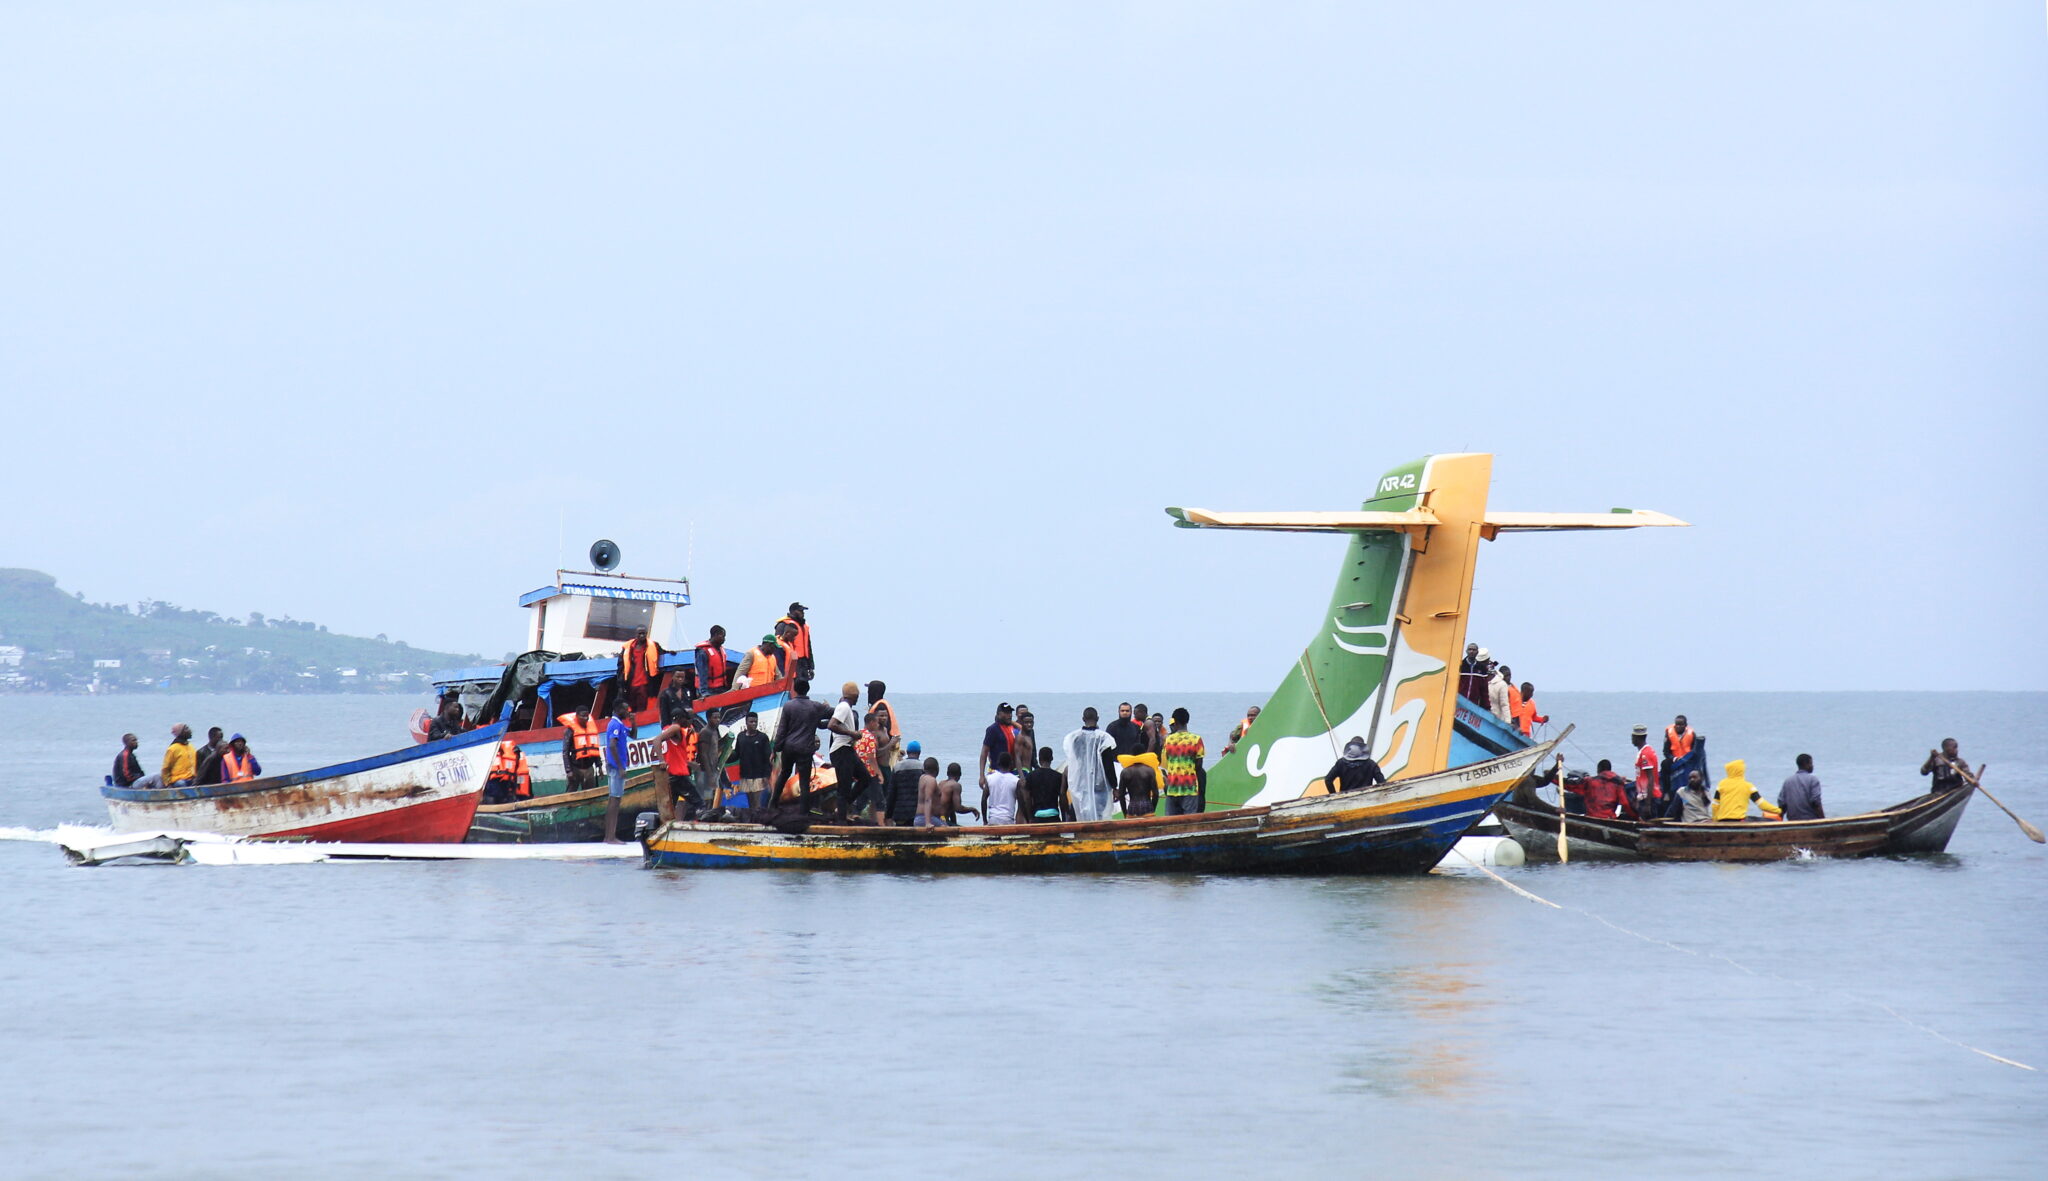 Самолет Precision Air после падения в озеро Виктория в Танзании. Фото EPA/Scanpix/Leta